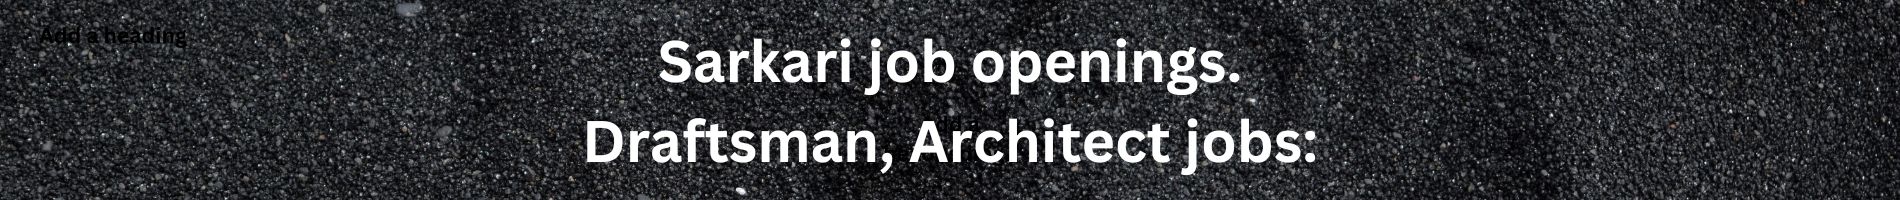 Sarkari job openings. Draftsman, Architect jobs: